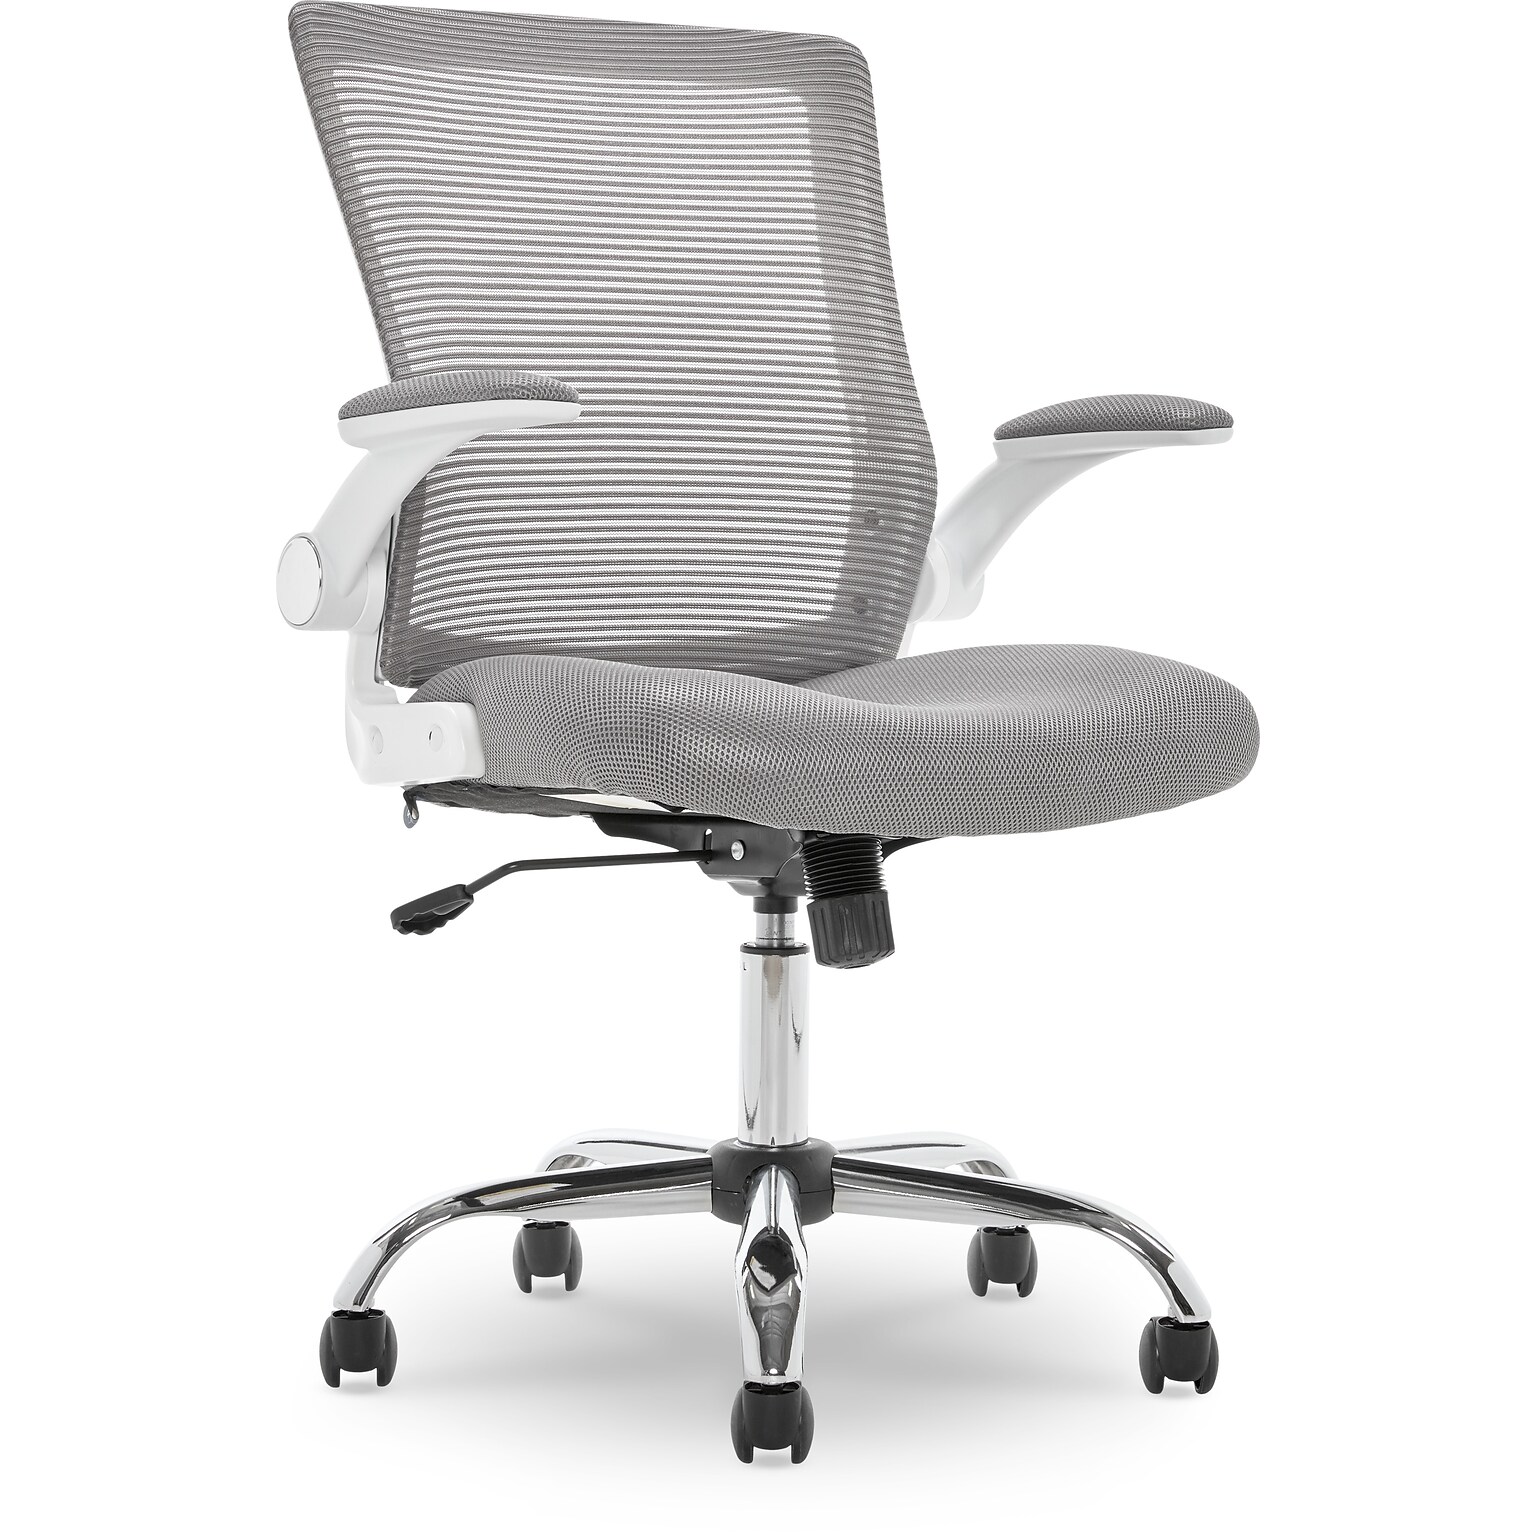 Serta Works Creativity Mesh Back Polyester Computer and Desk Chair, Gray (CHR10023B)